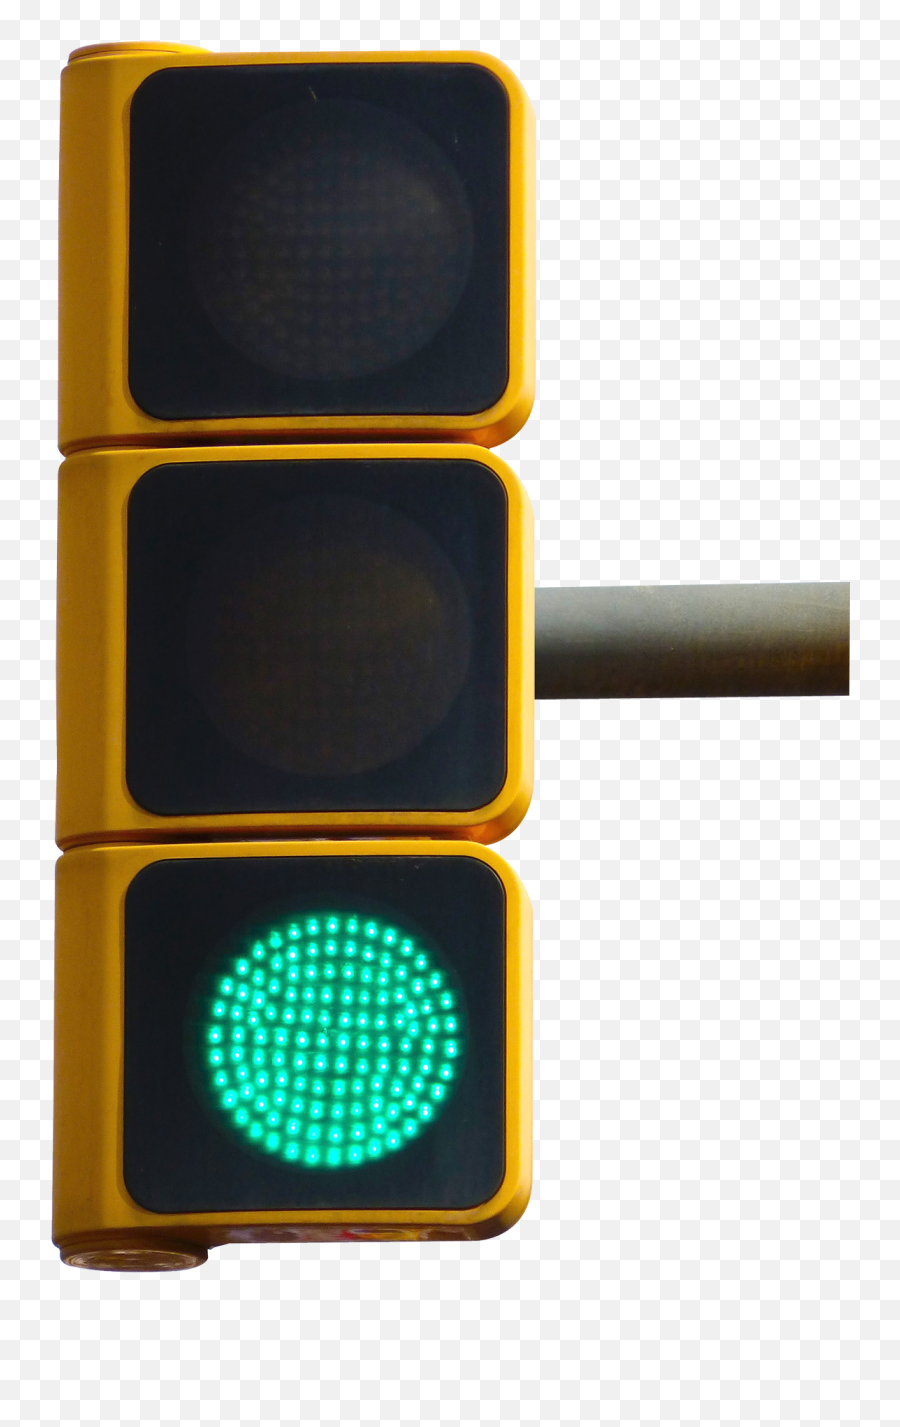 Traffic Light Png Transparent Image - Traffic Light,Traffic Light Png